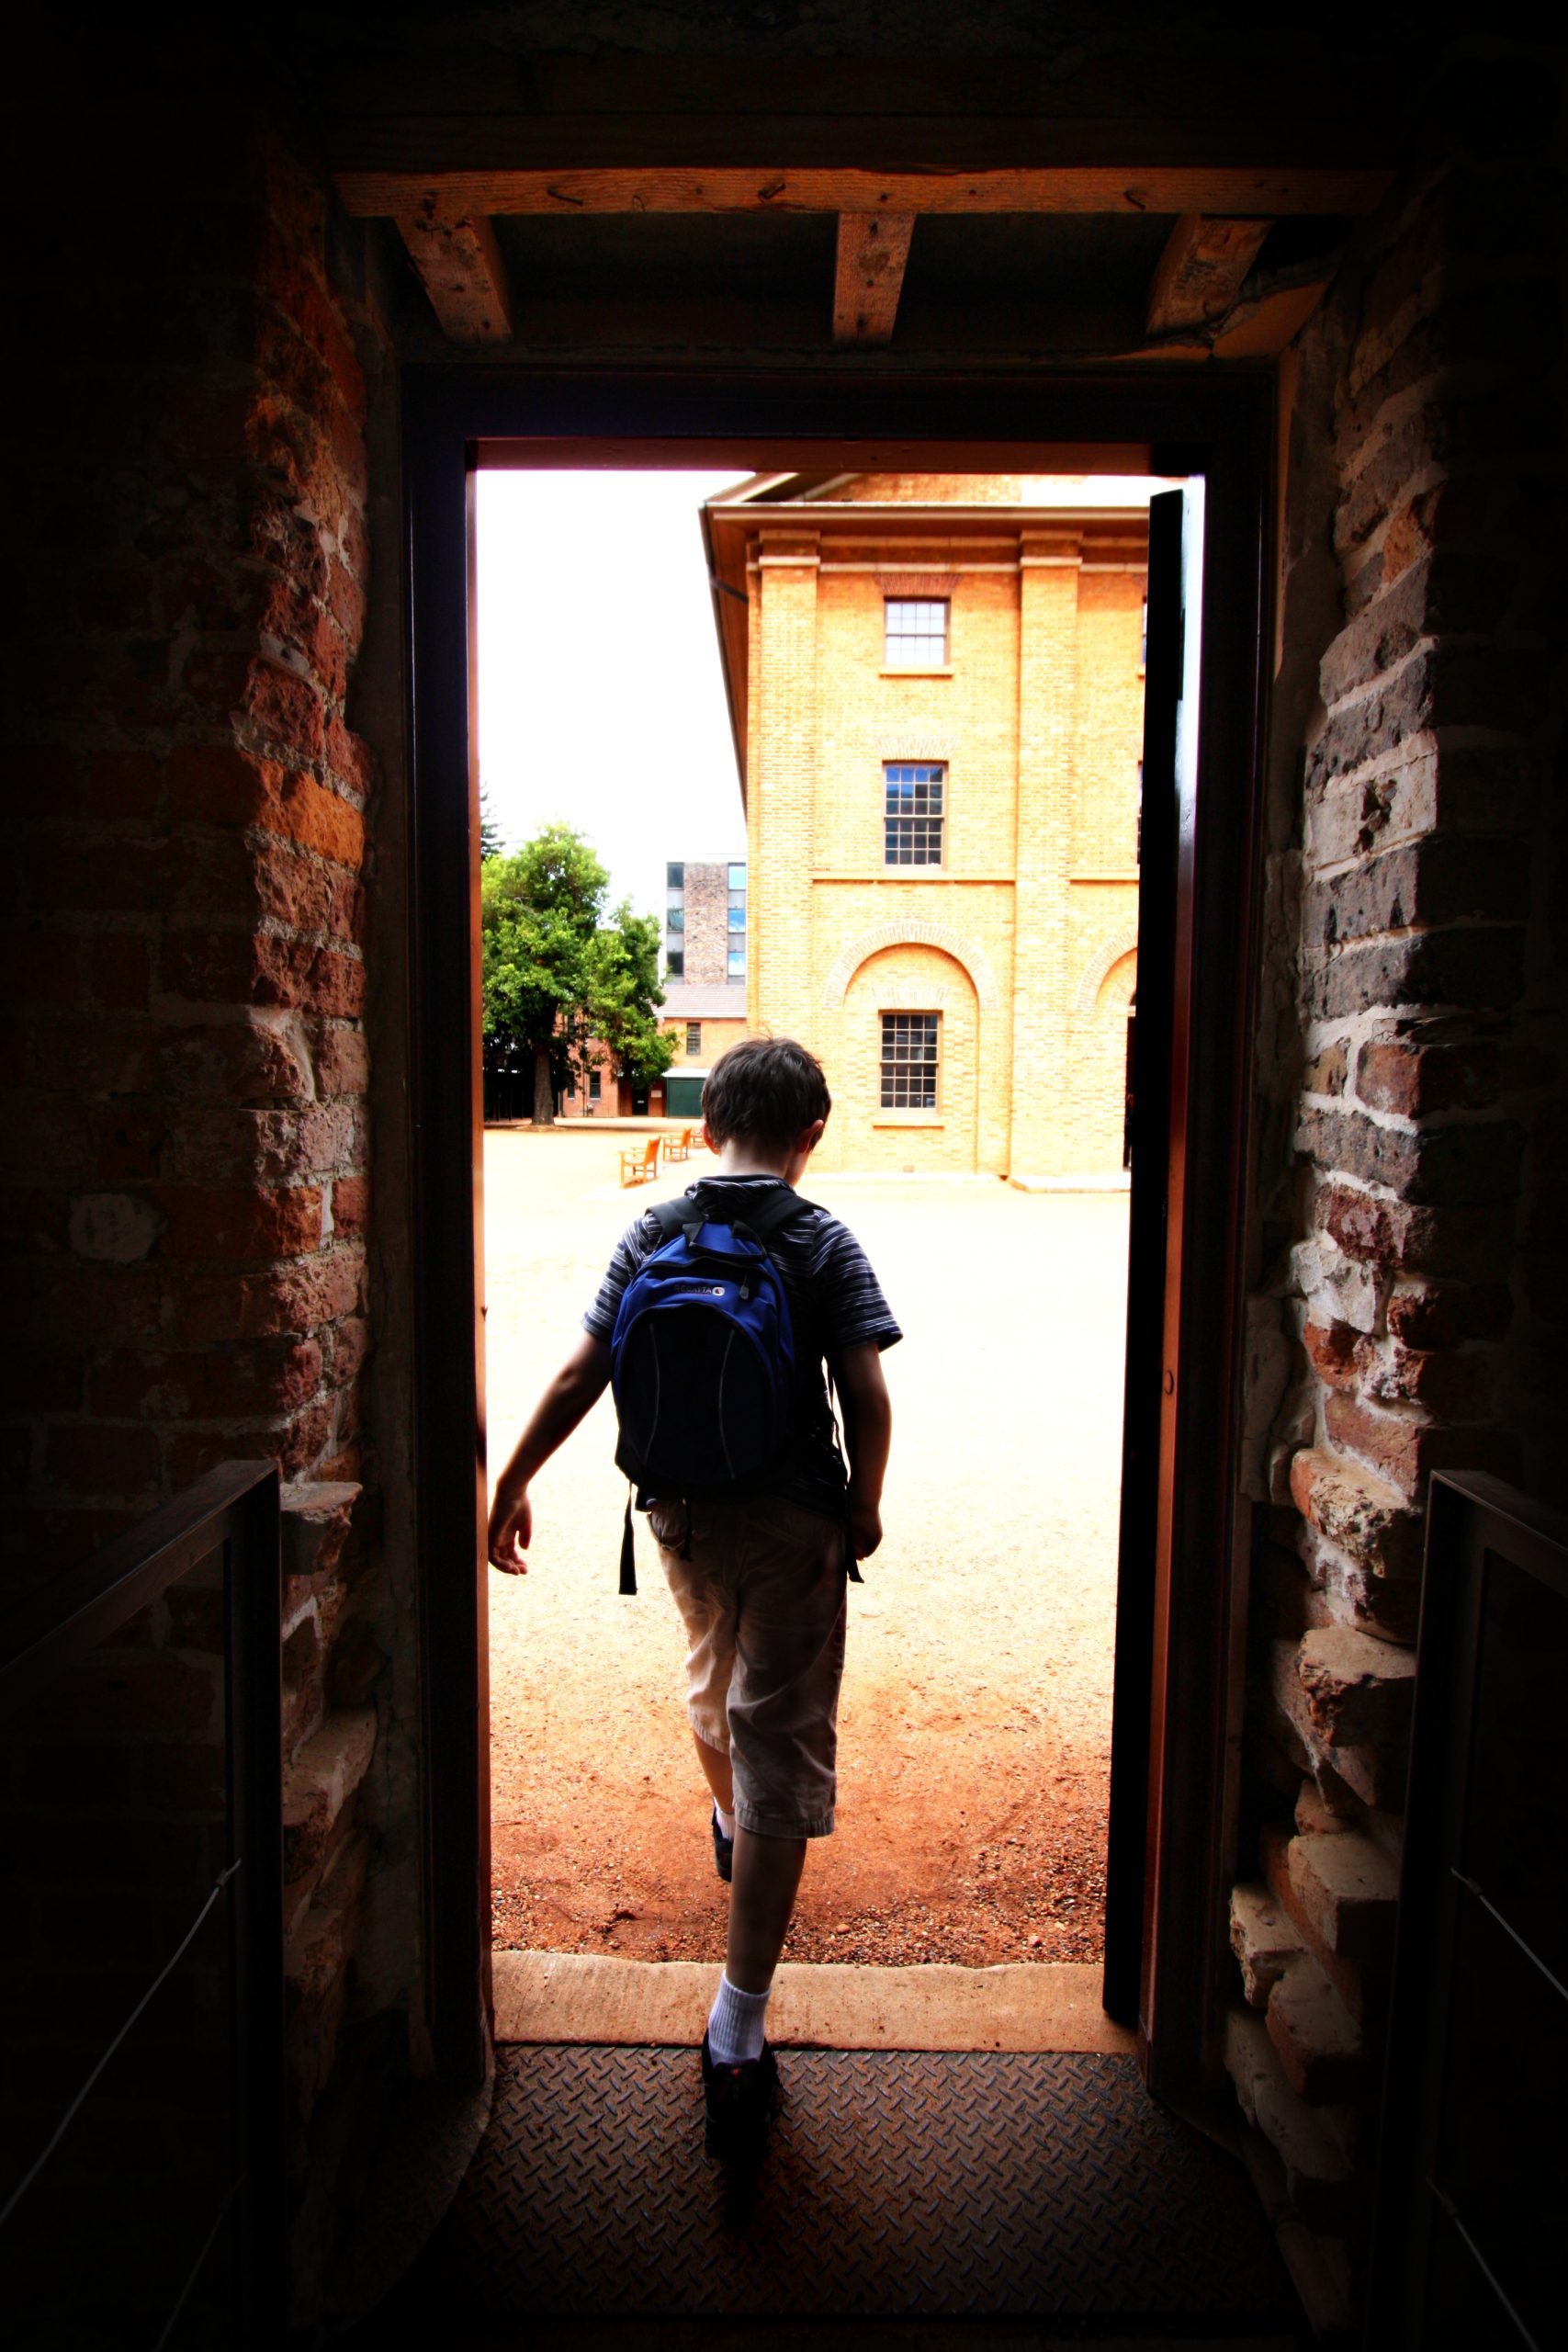 boy carrying a rucksack walking through a doorway into the light